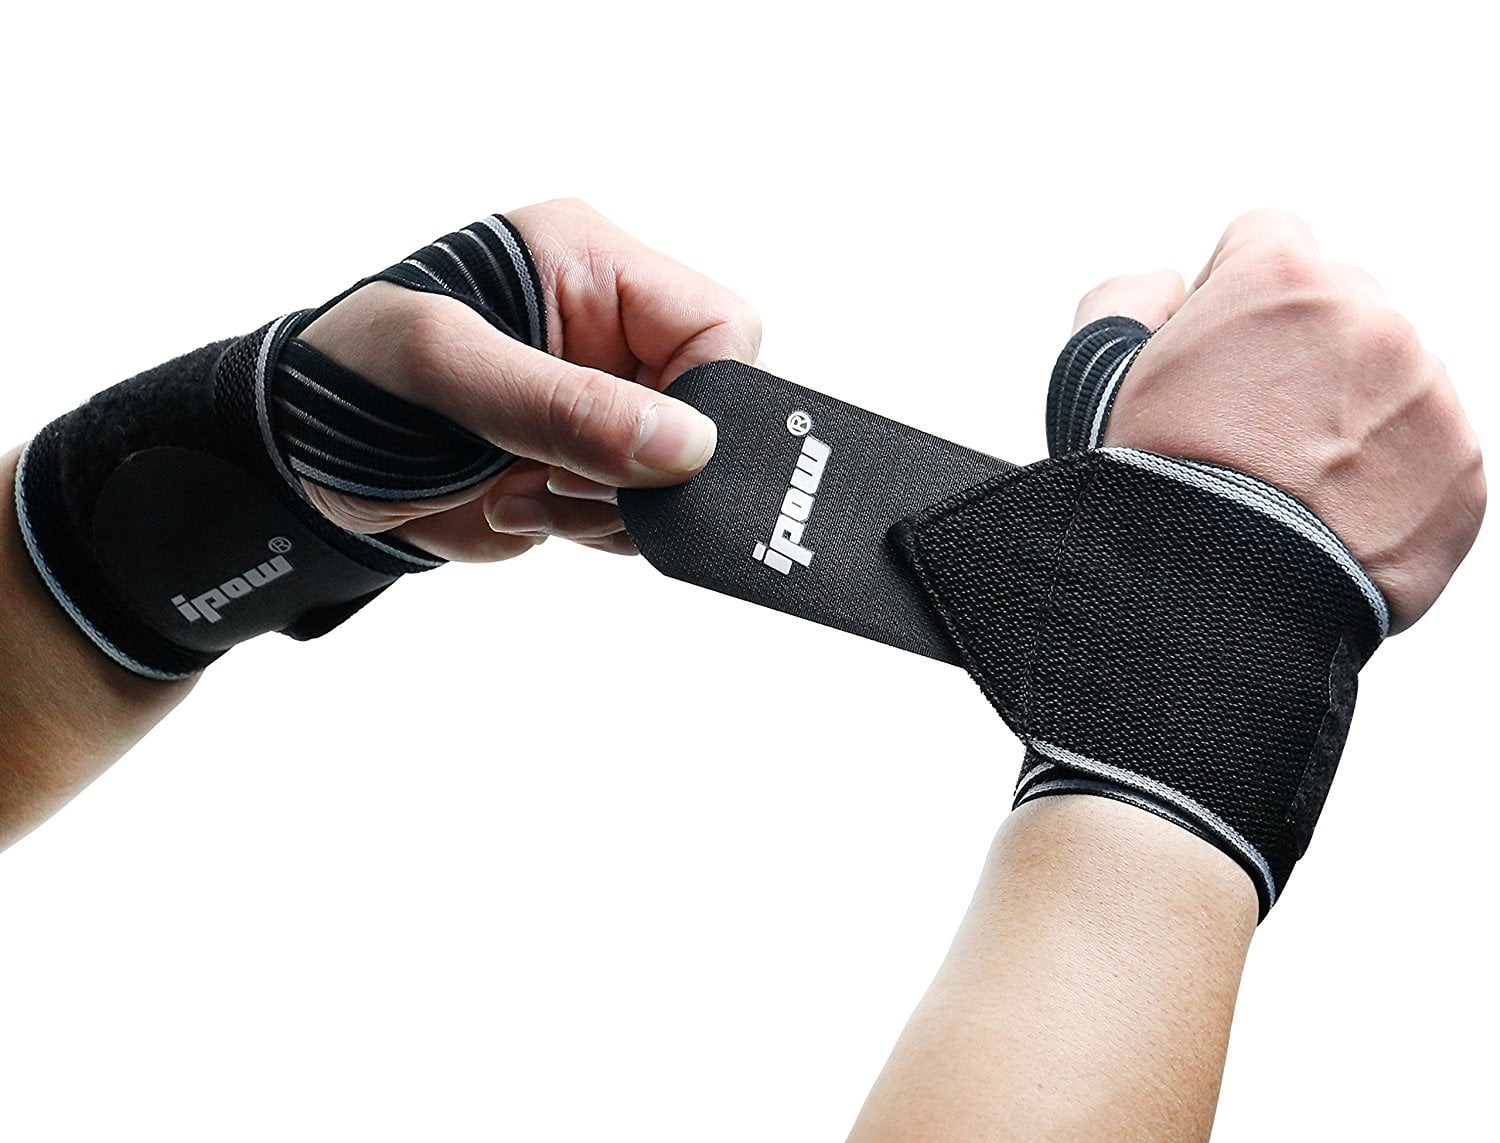 2 Packs Wrist Brace Adjustable Support Gym Weight Lifting Guard Bandage Wraps